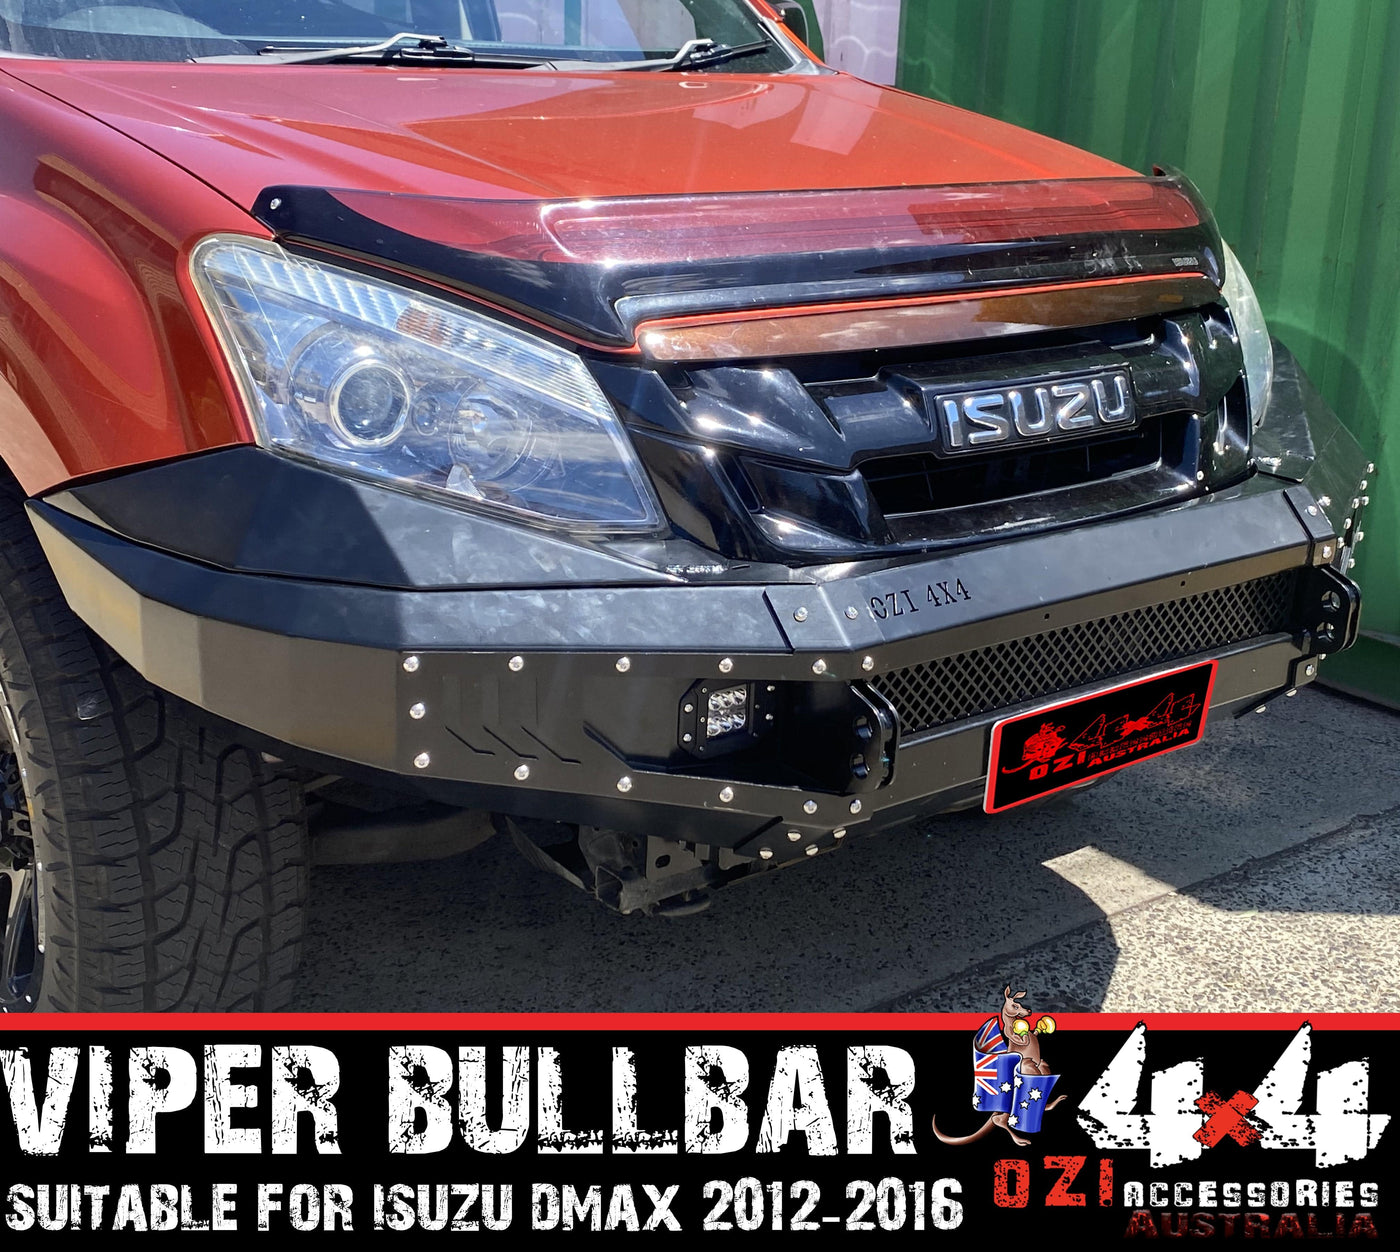 Viper Bullbar Suitable For Isuzu D-MAX 2012-2016